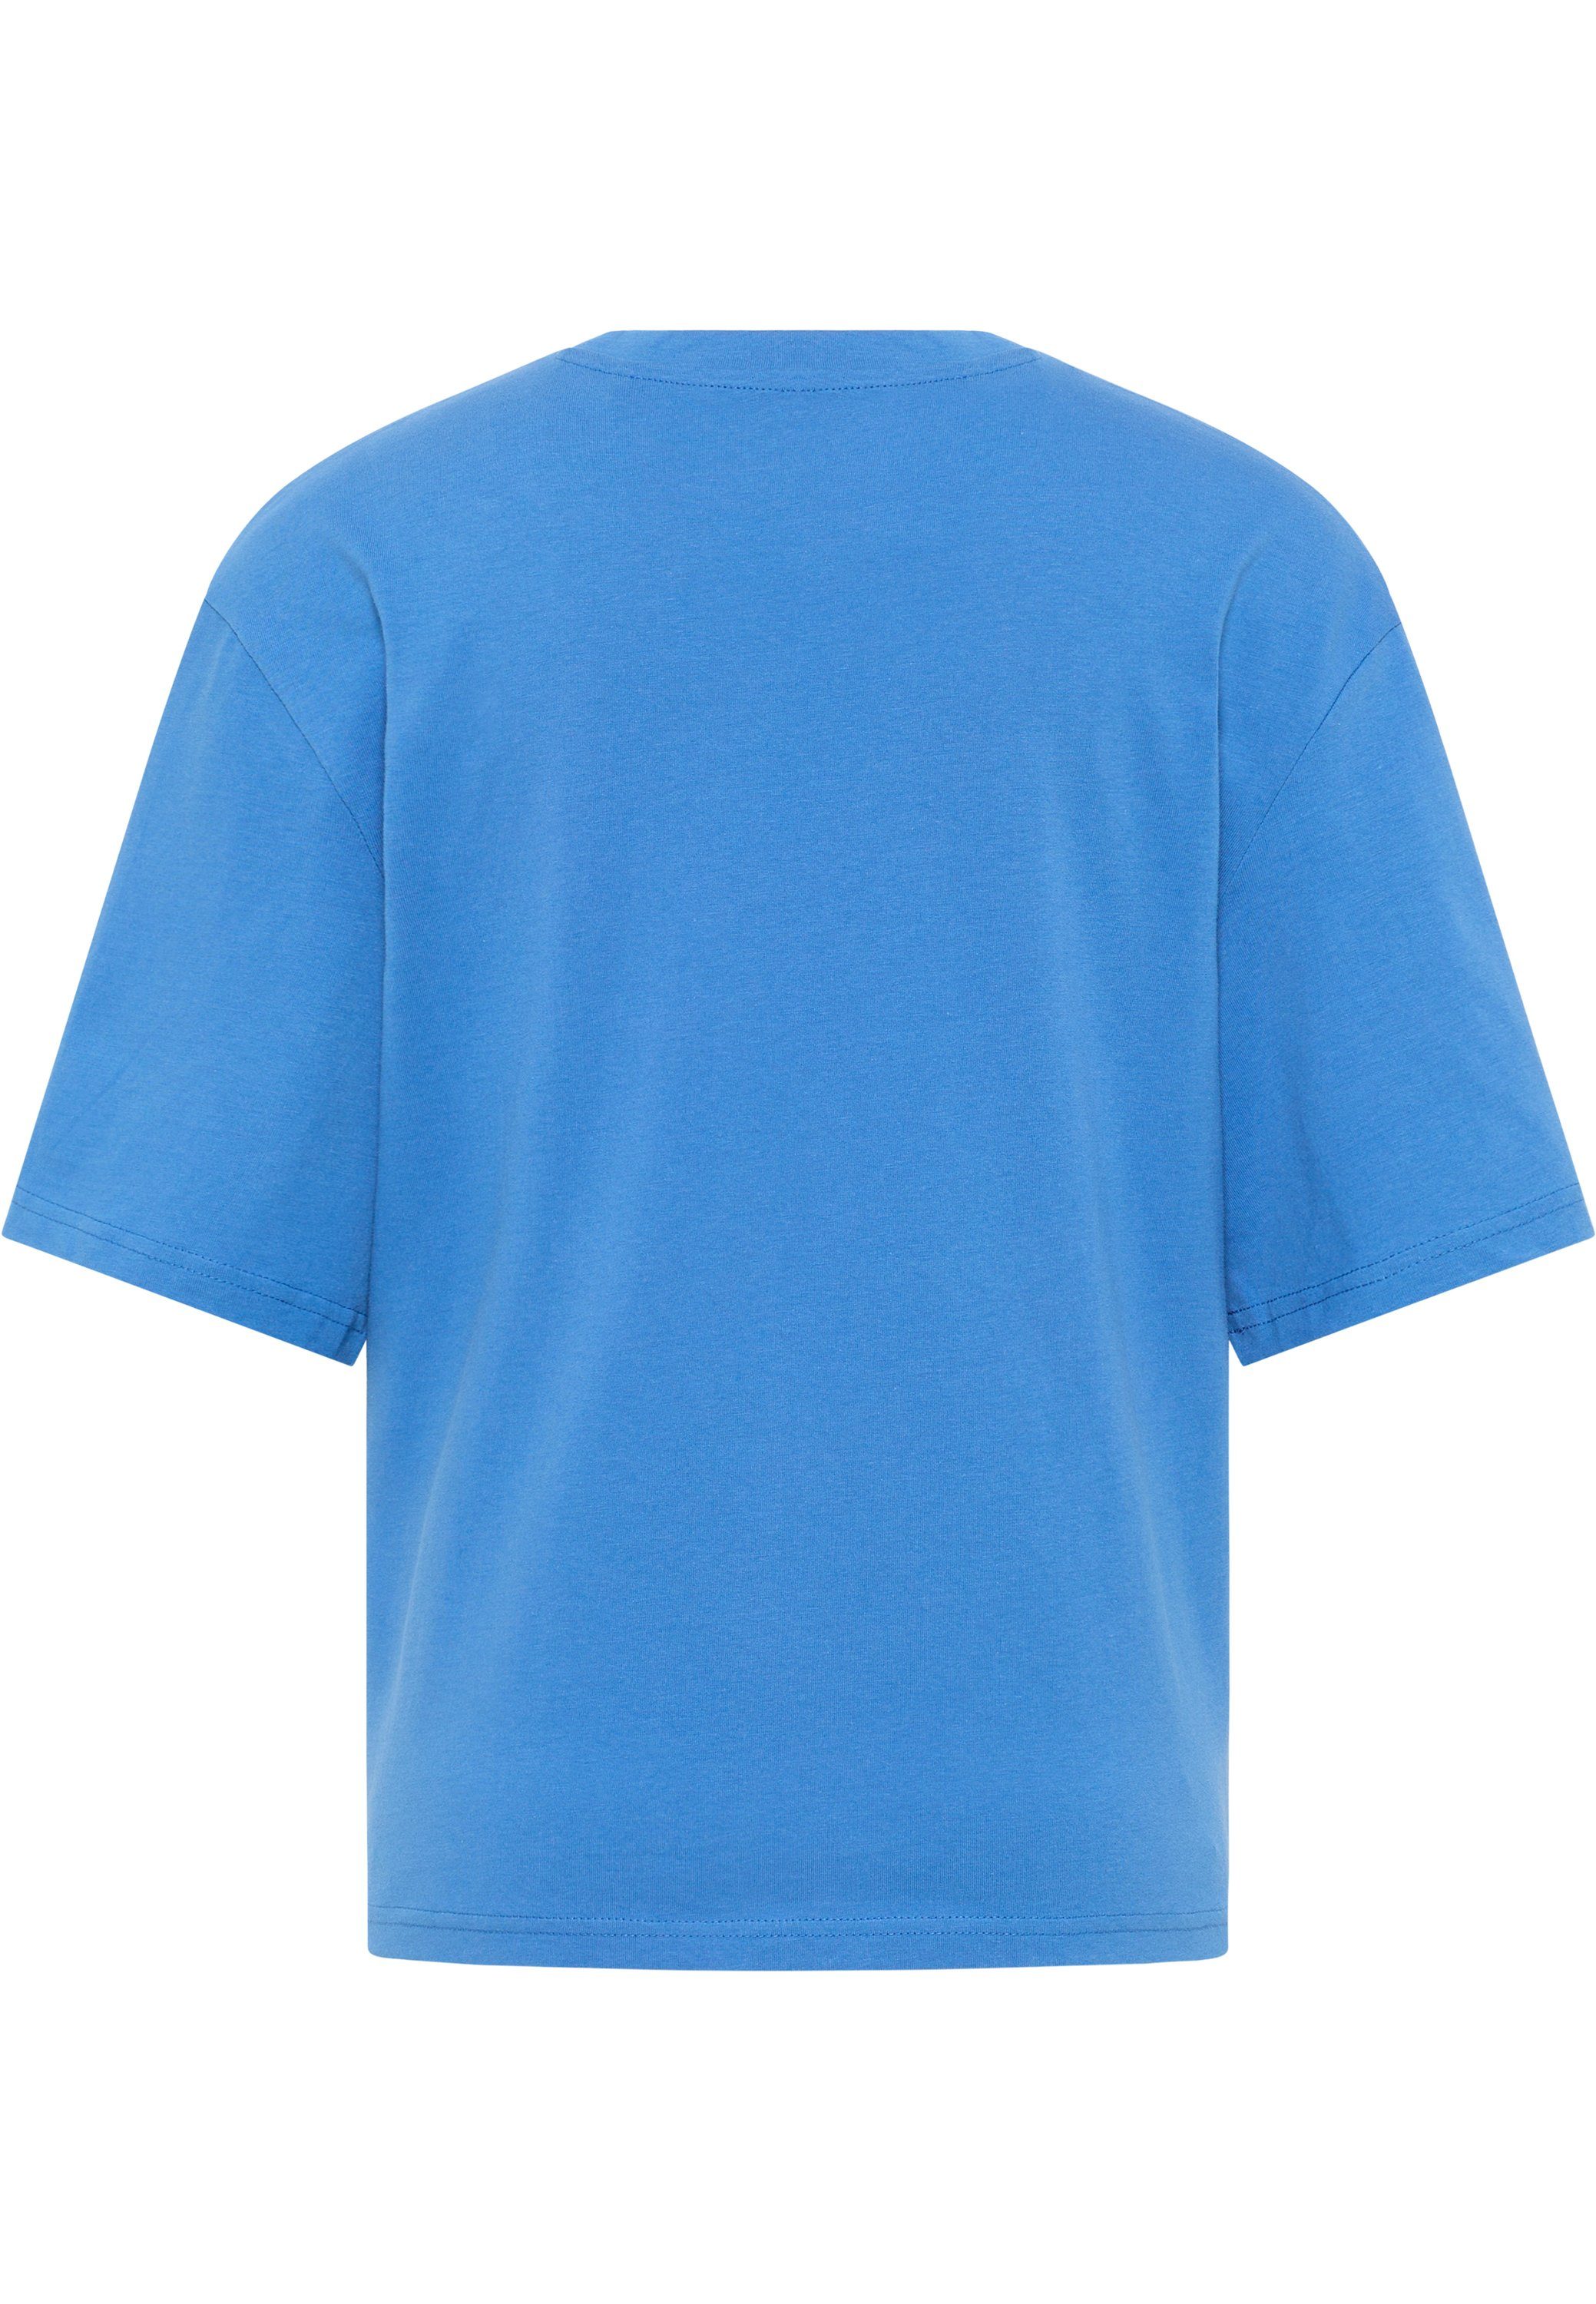 MUSTANG Kurzarmshirt Mustang T-Shirt T-Shirt königsblau